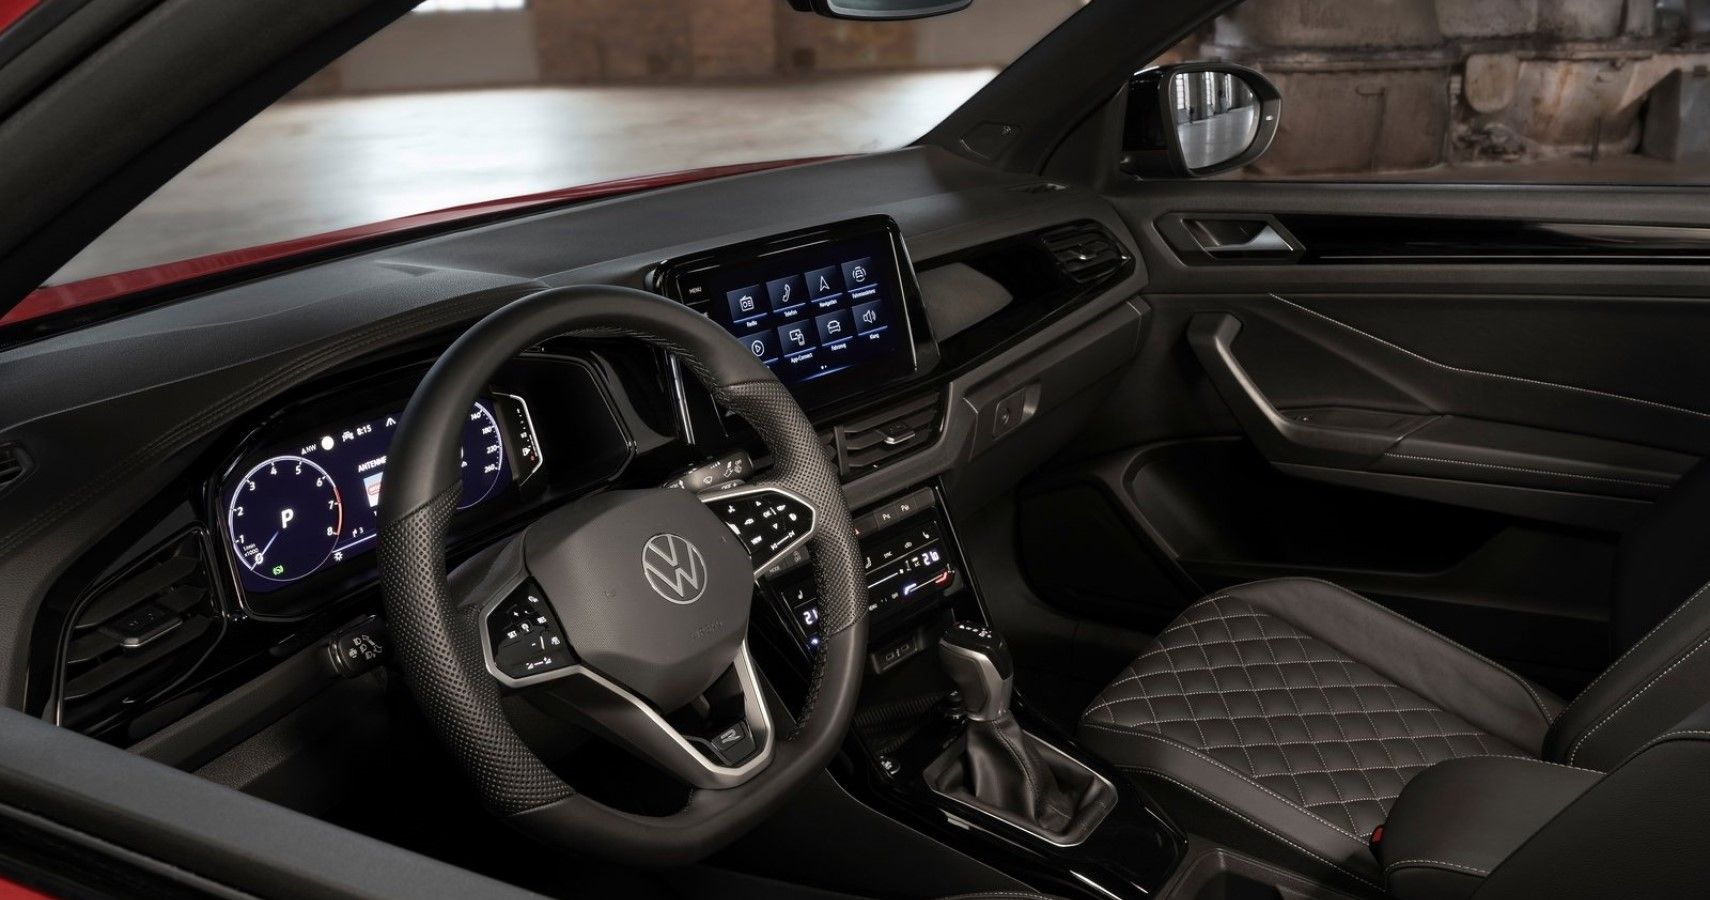 Volkswagen T-Roc Images - T-Roc Car Images, Interior & Exterior Photos